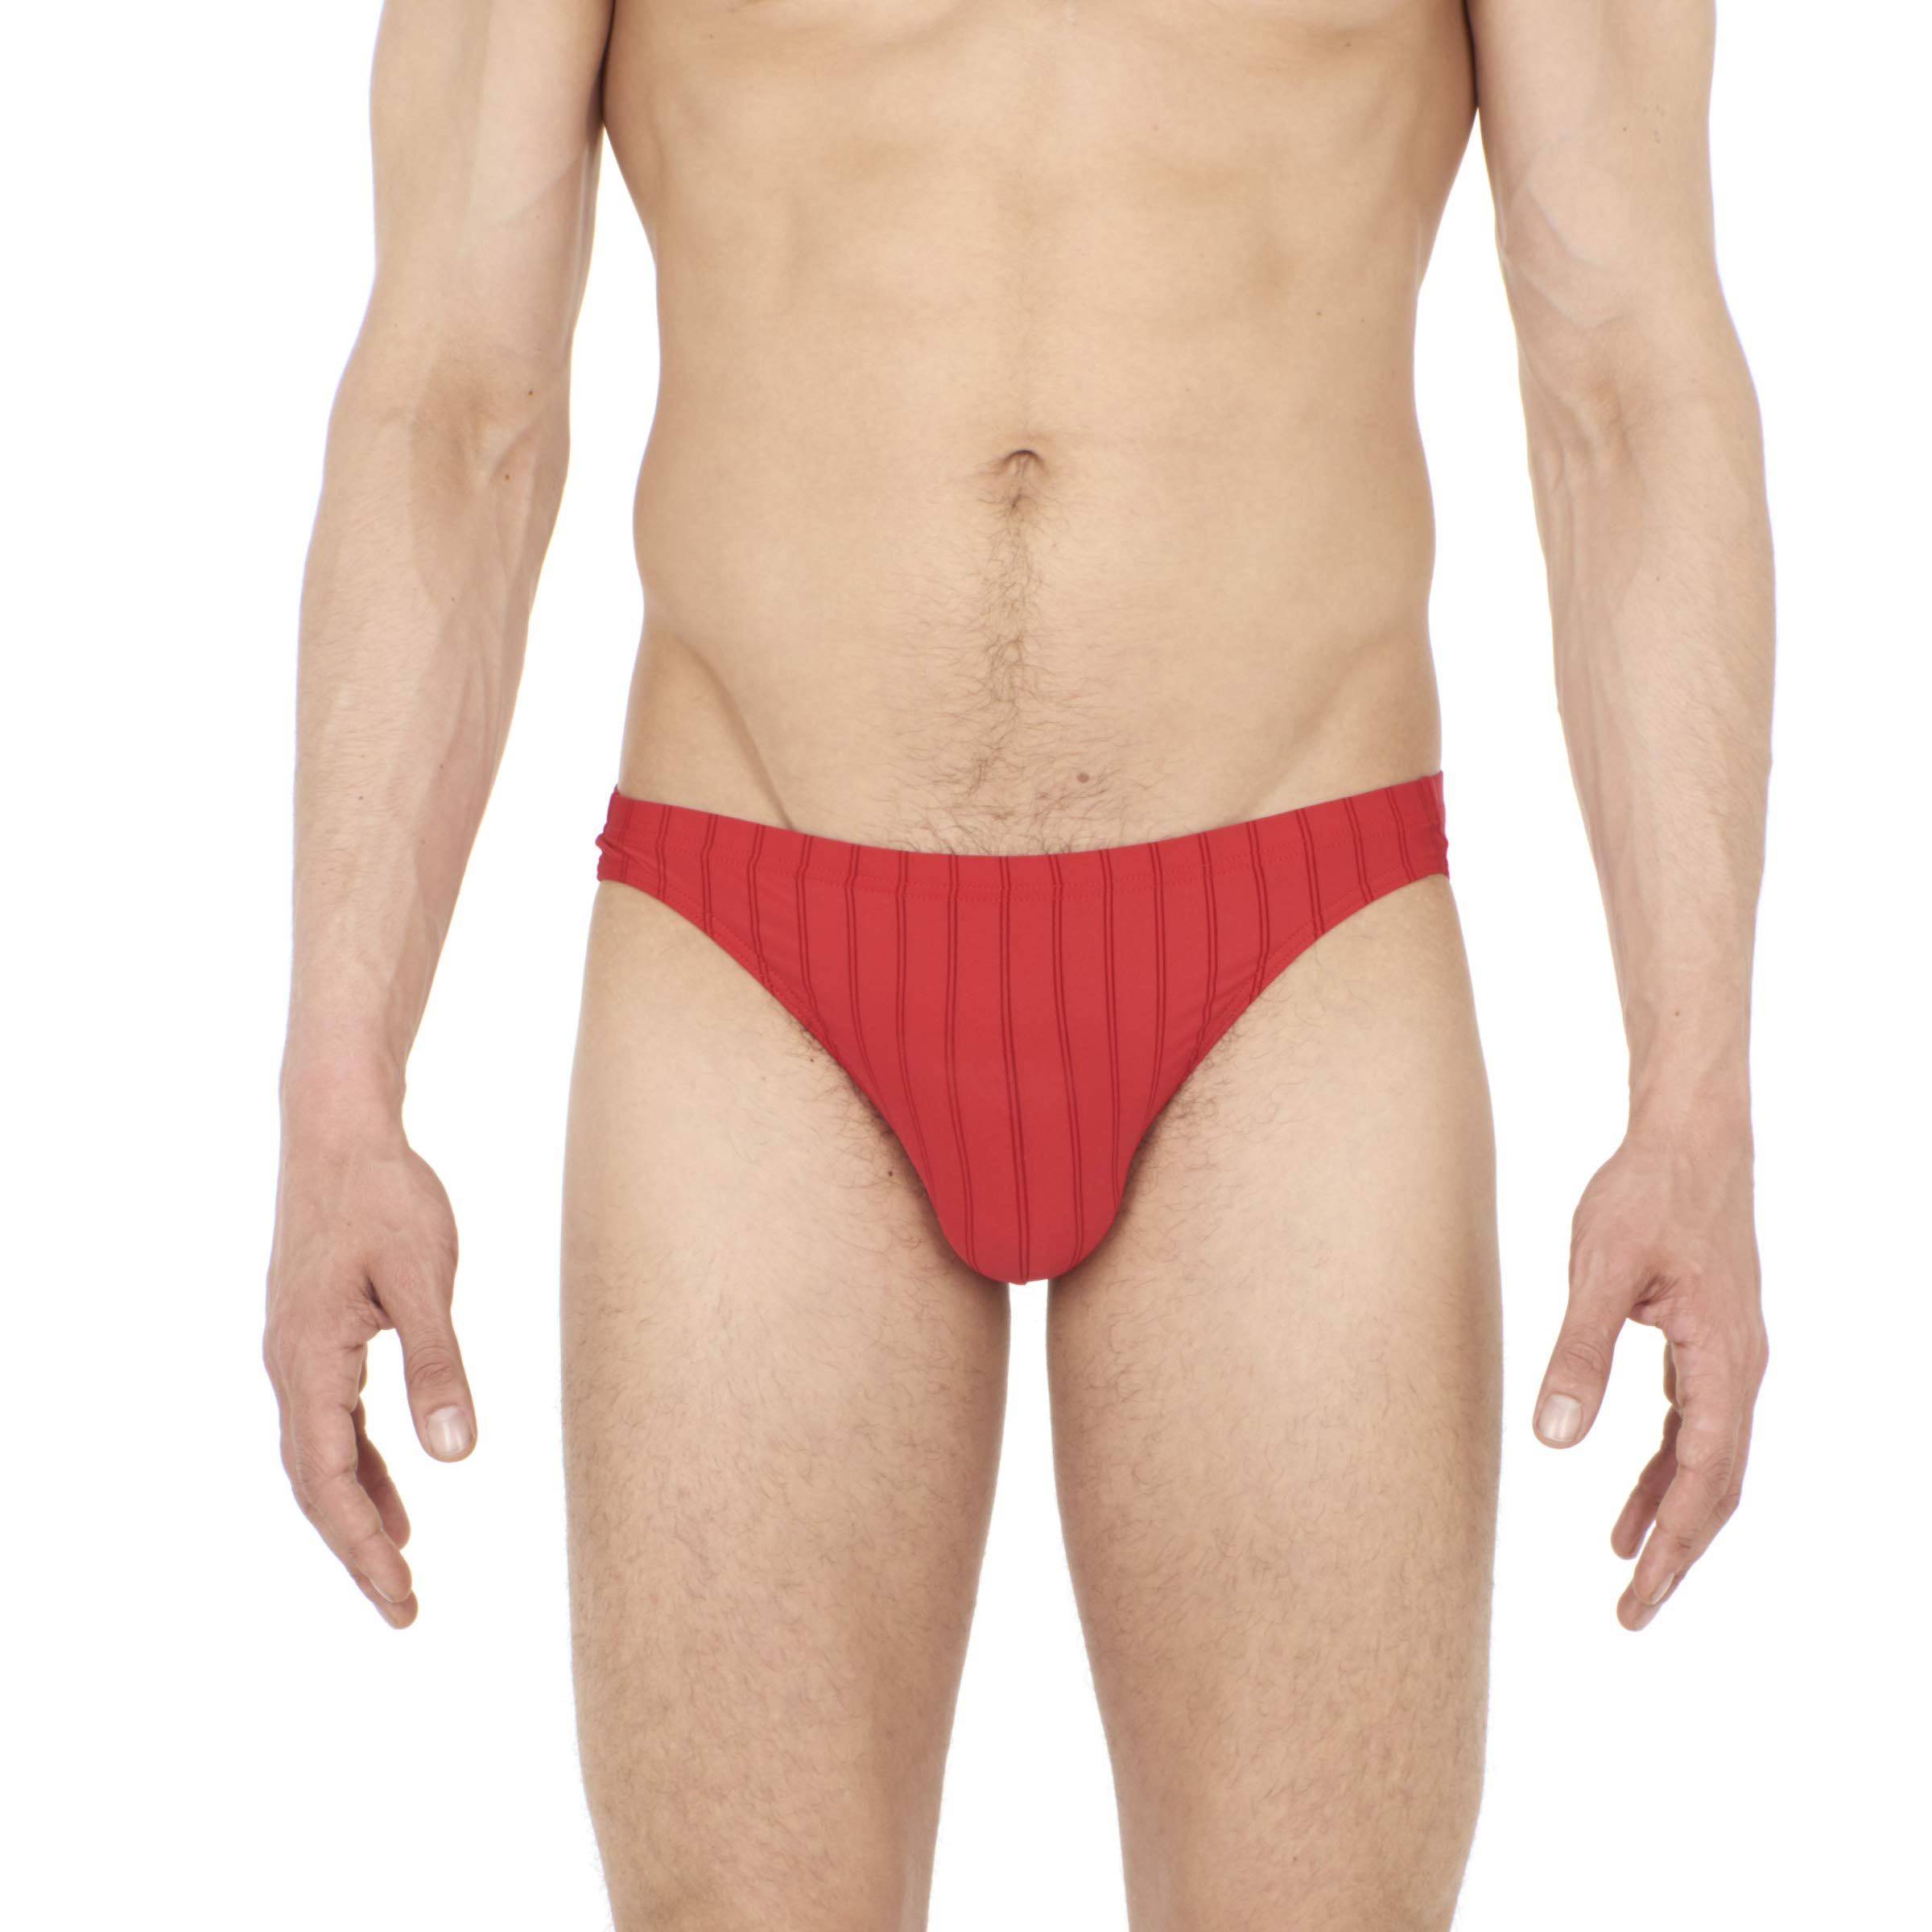 HOM Herren Micro Slip Chic Unterhose, Rot, XL EU